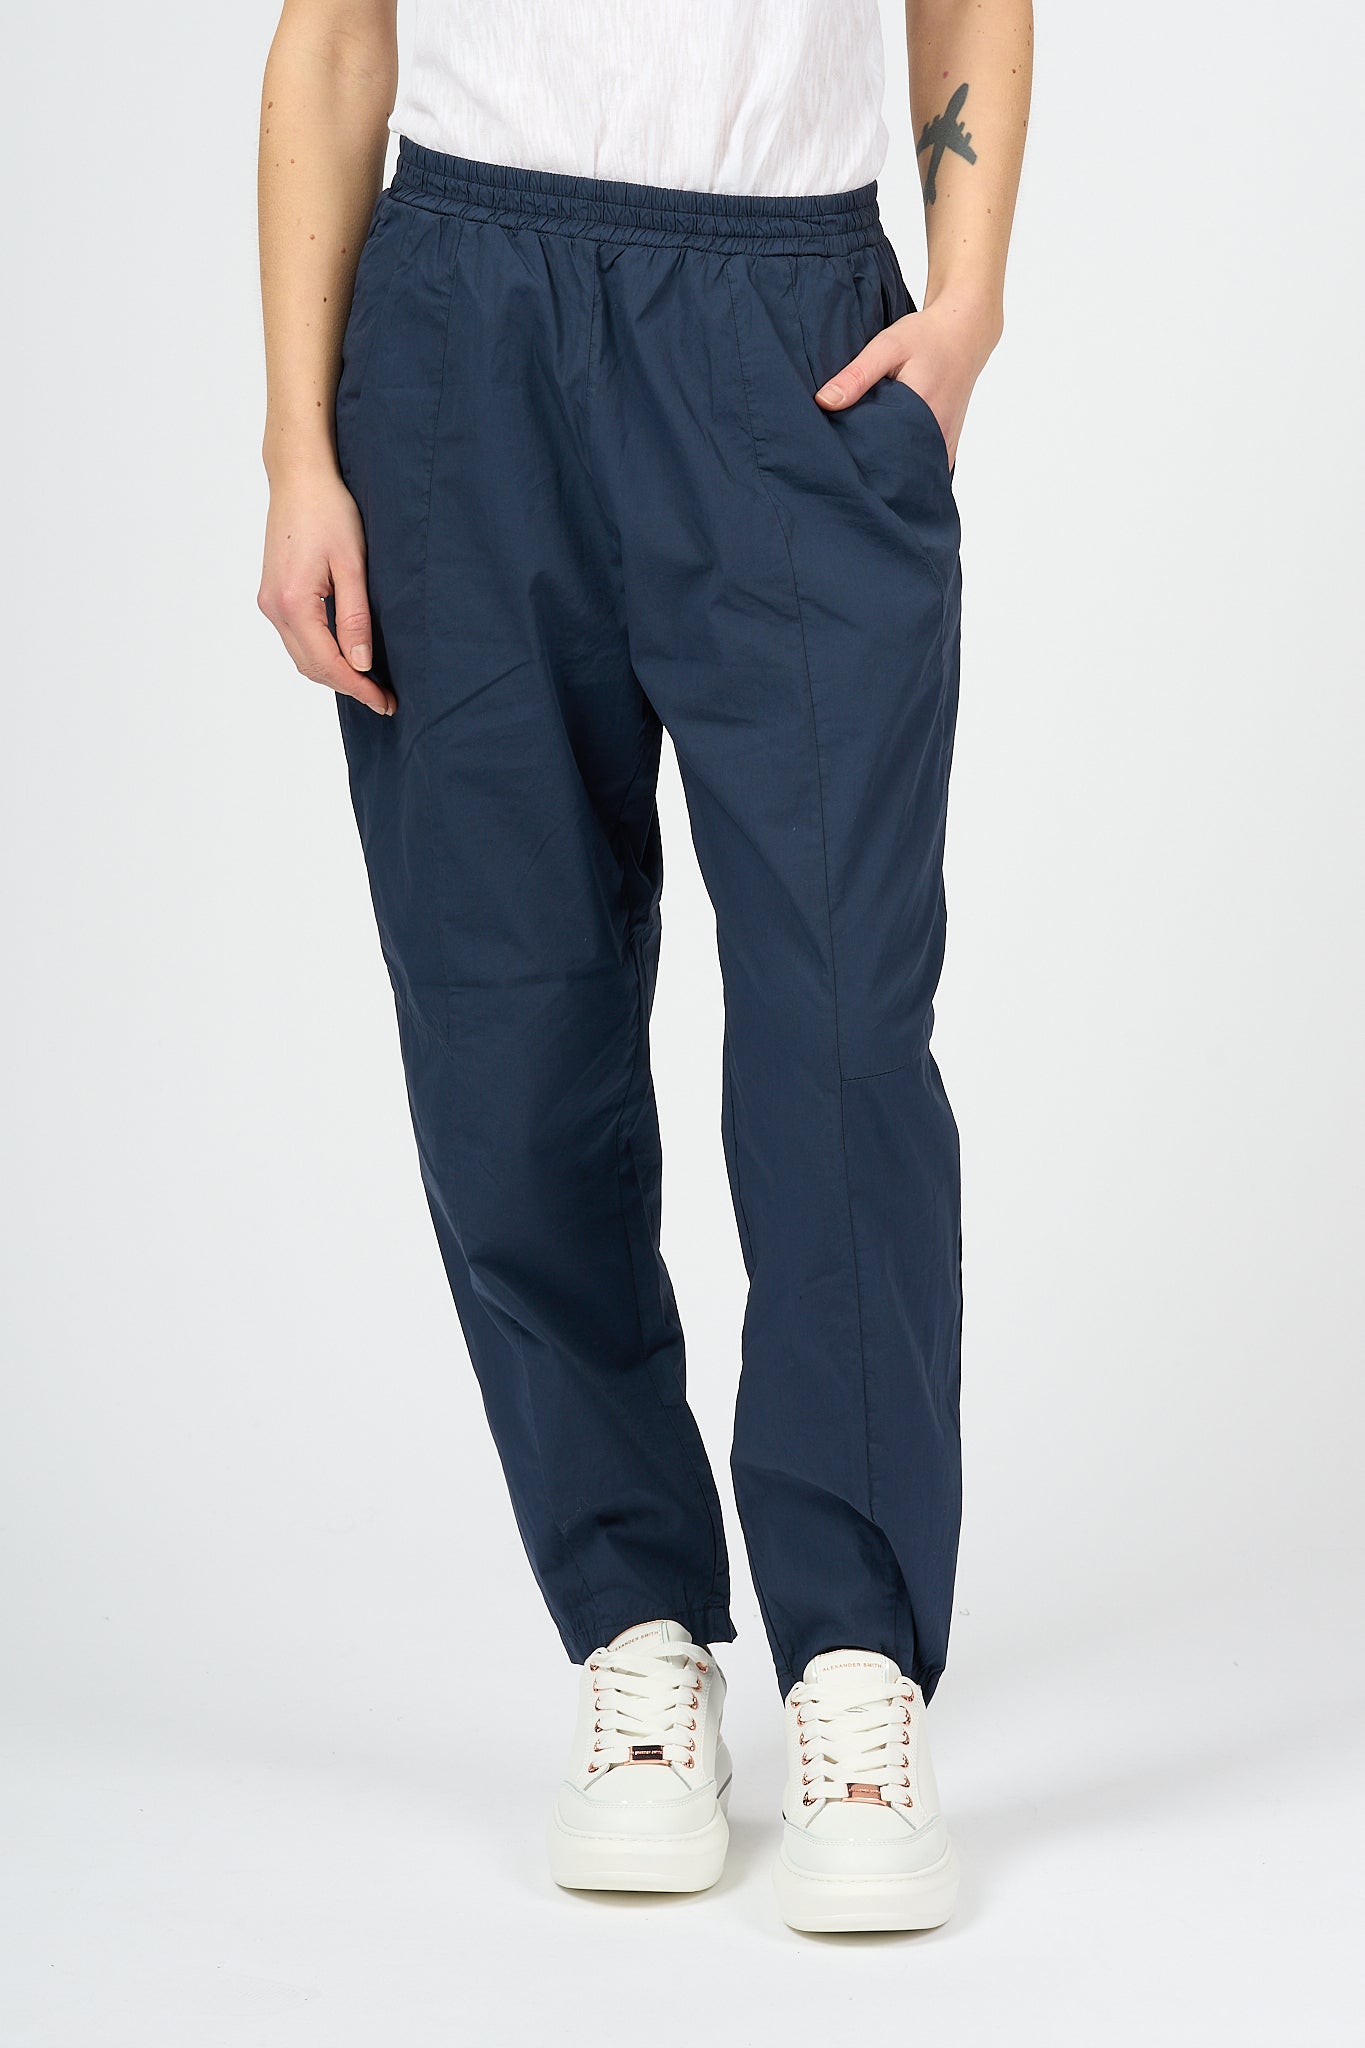 Transit Pantalone Cotone Blu Navy Donna-1